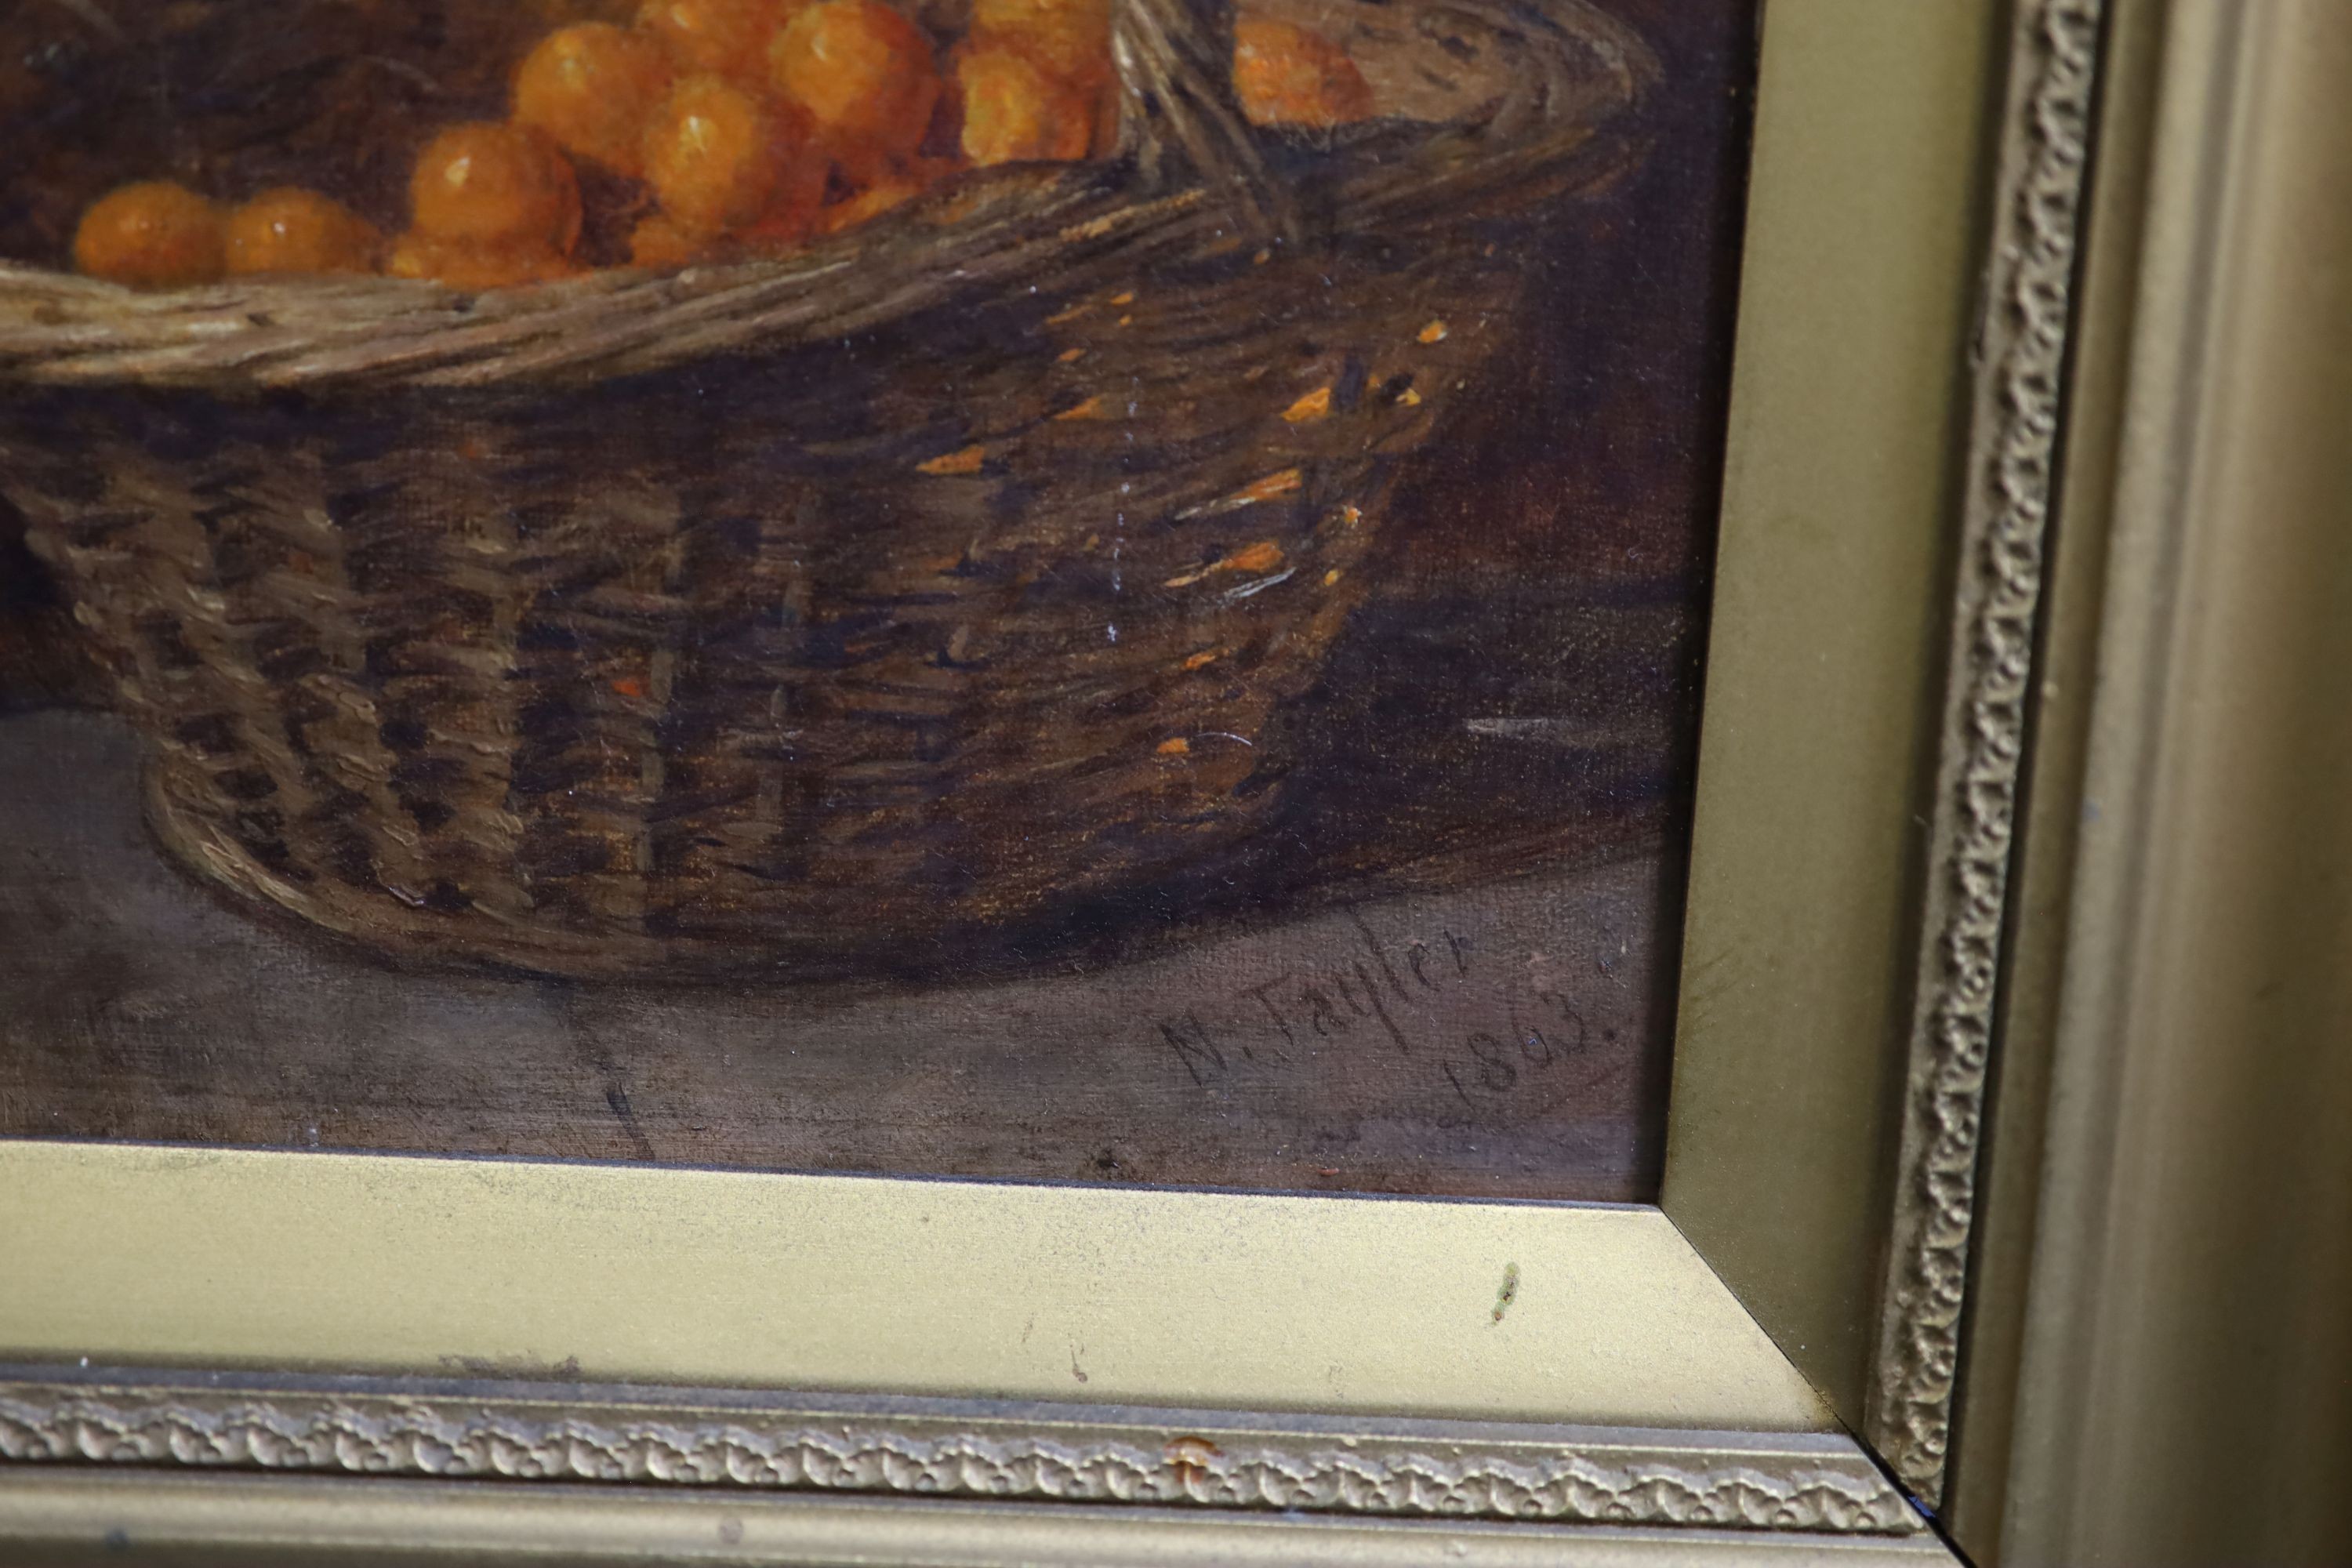 Norman E. Tayler (1843-1915), The Orange Seller, Oil on canvas, 50 x 40cm.